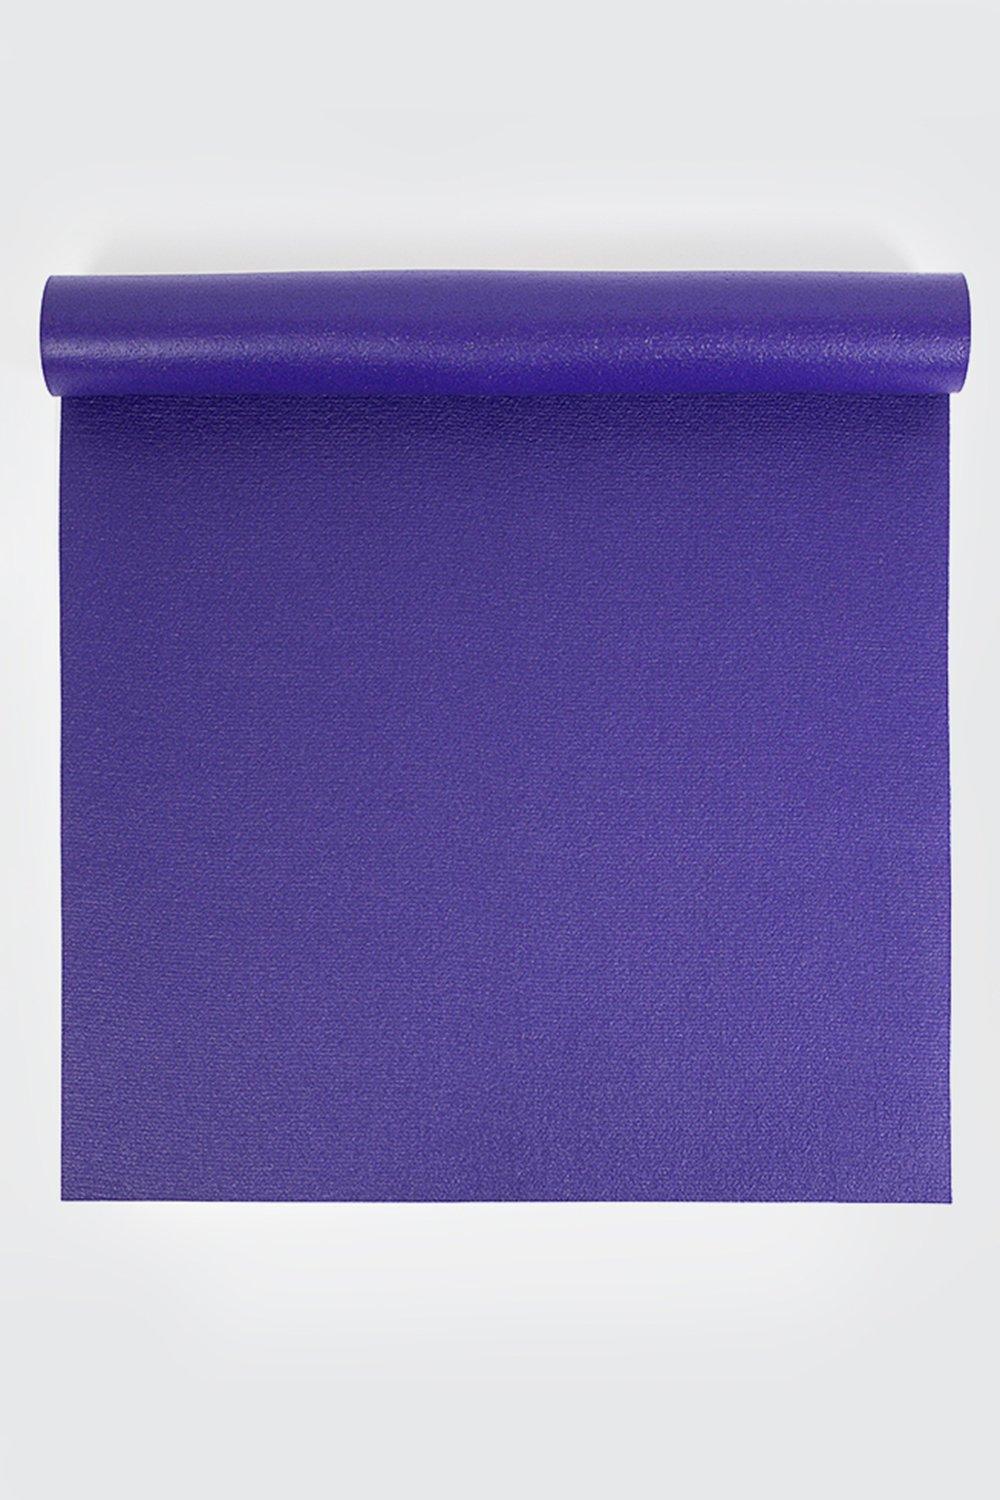 Yoga Studio Oeko-Tex Travel Yoga Mat 3mm|purple